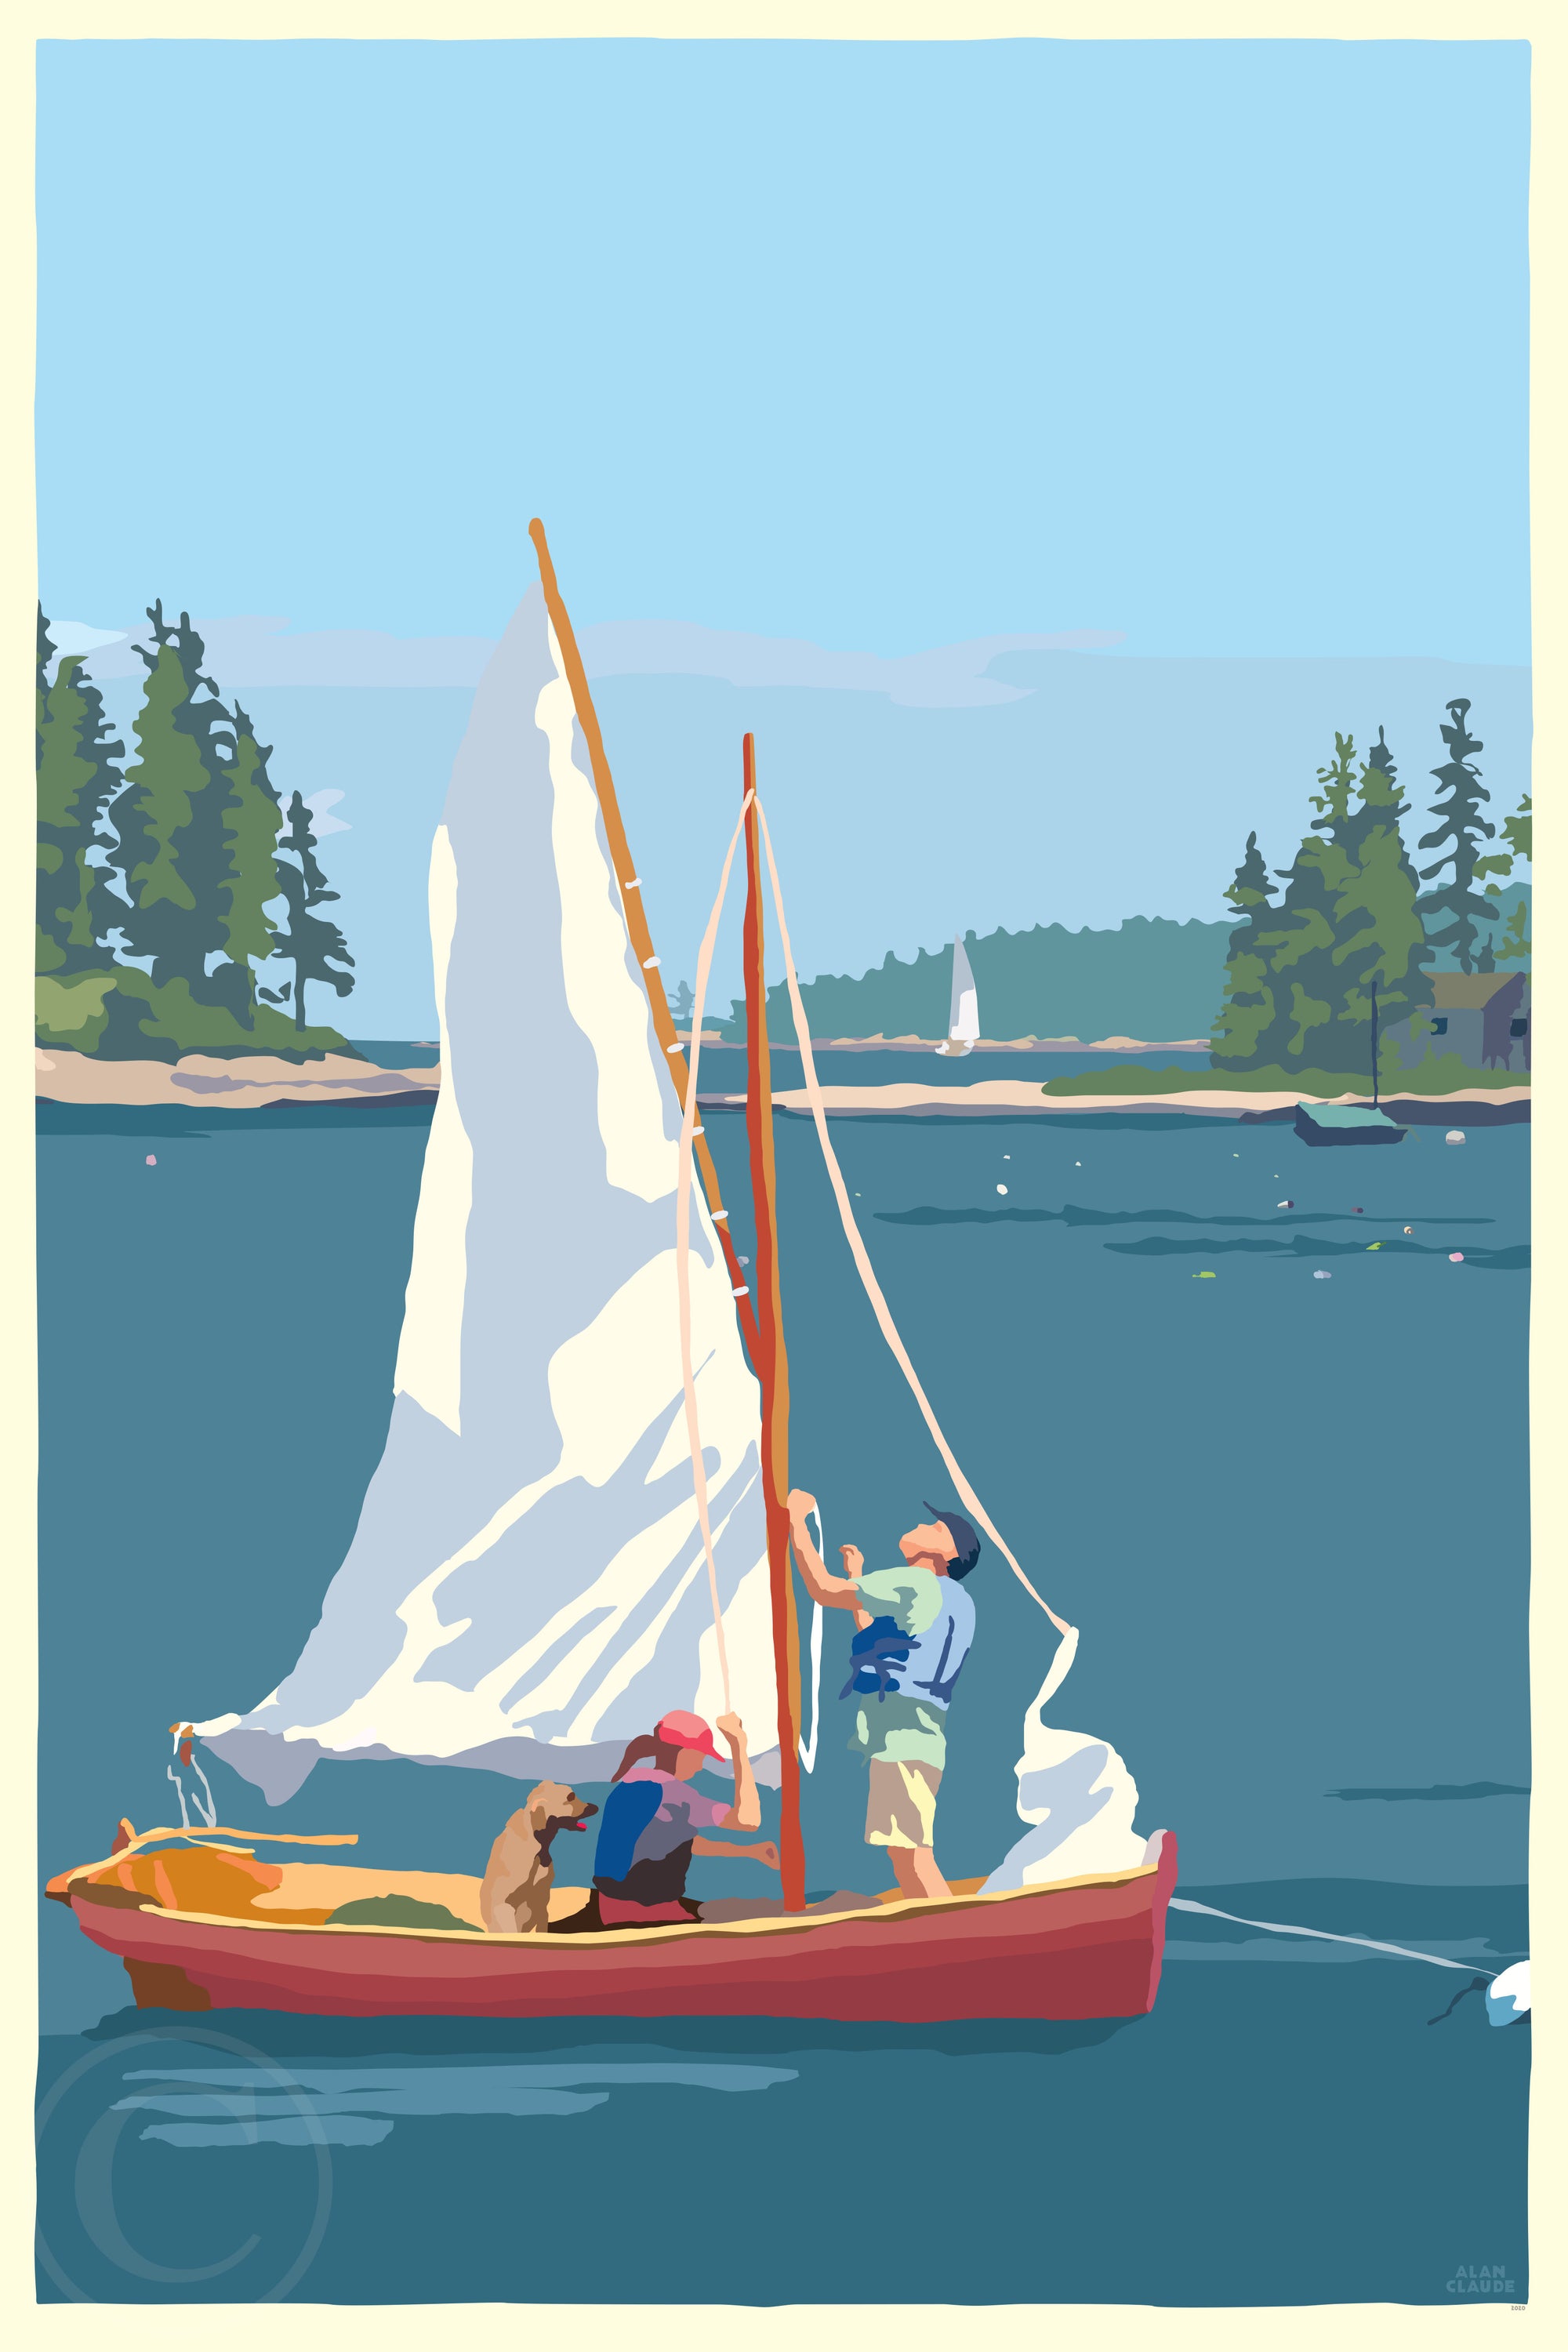 Hoist The Sail Art Print 24" x 36" Wall Poster By Alan Claude - Maine